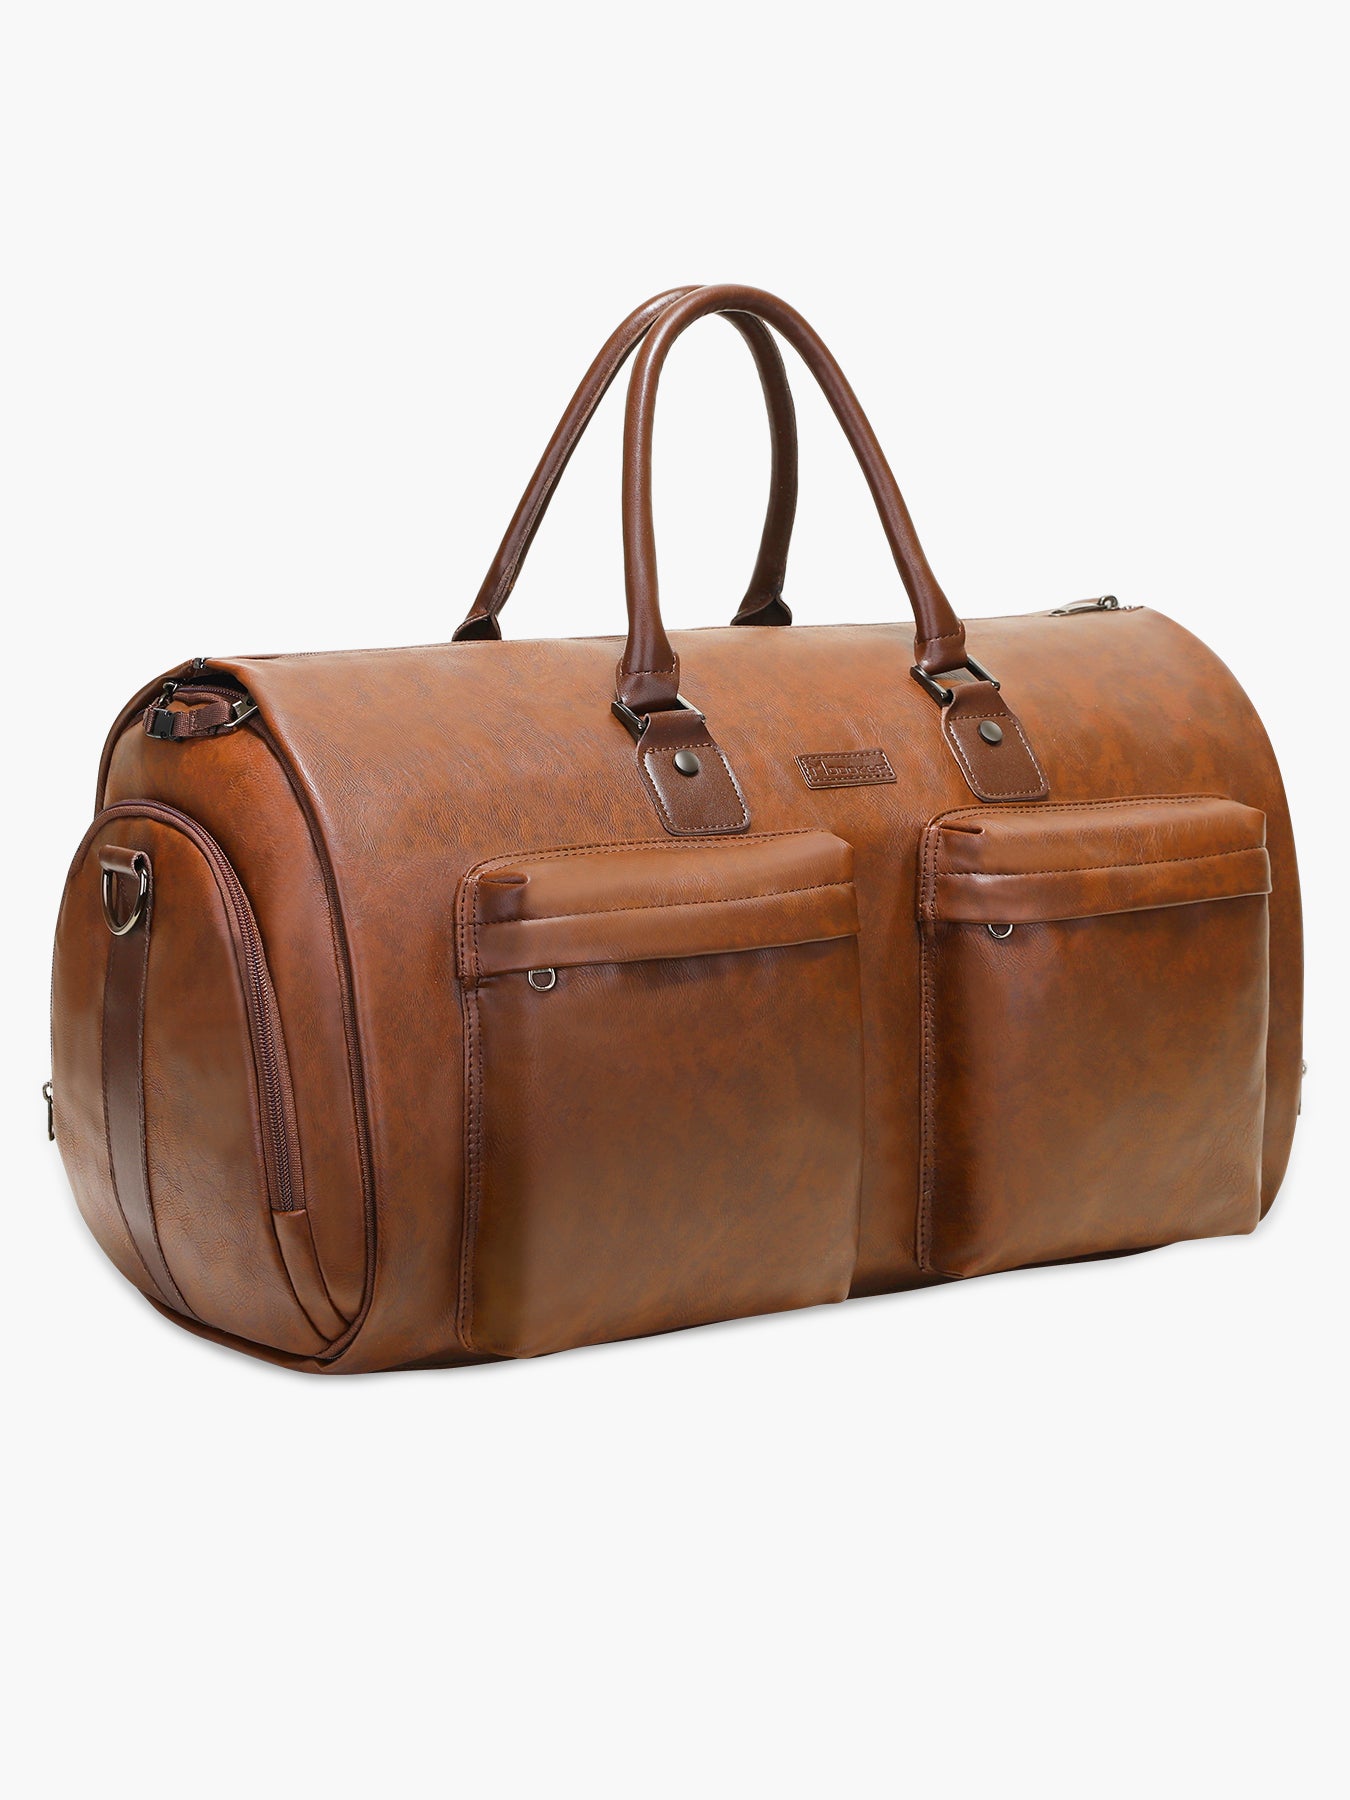 Modoker Convertible Leather Garment Bag For Travel Carry On - Modoker